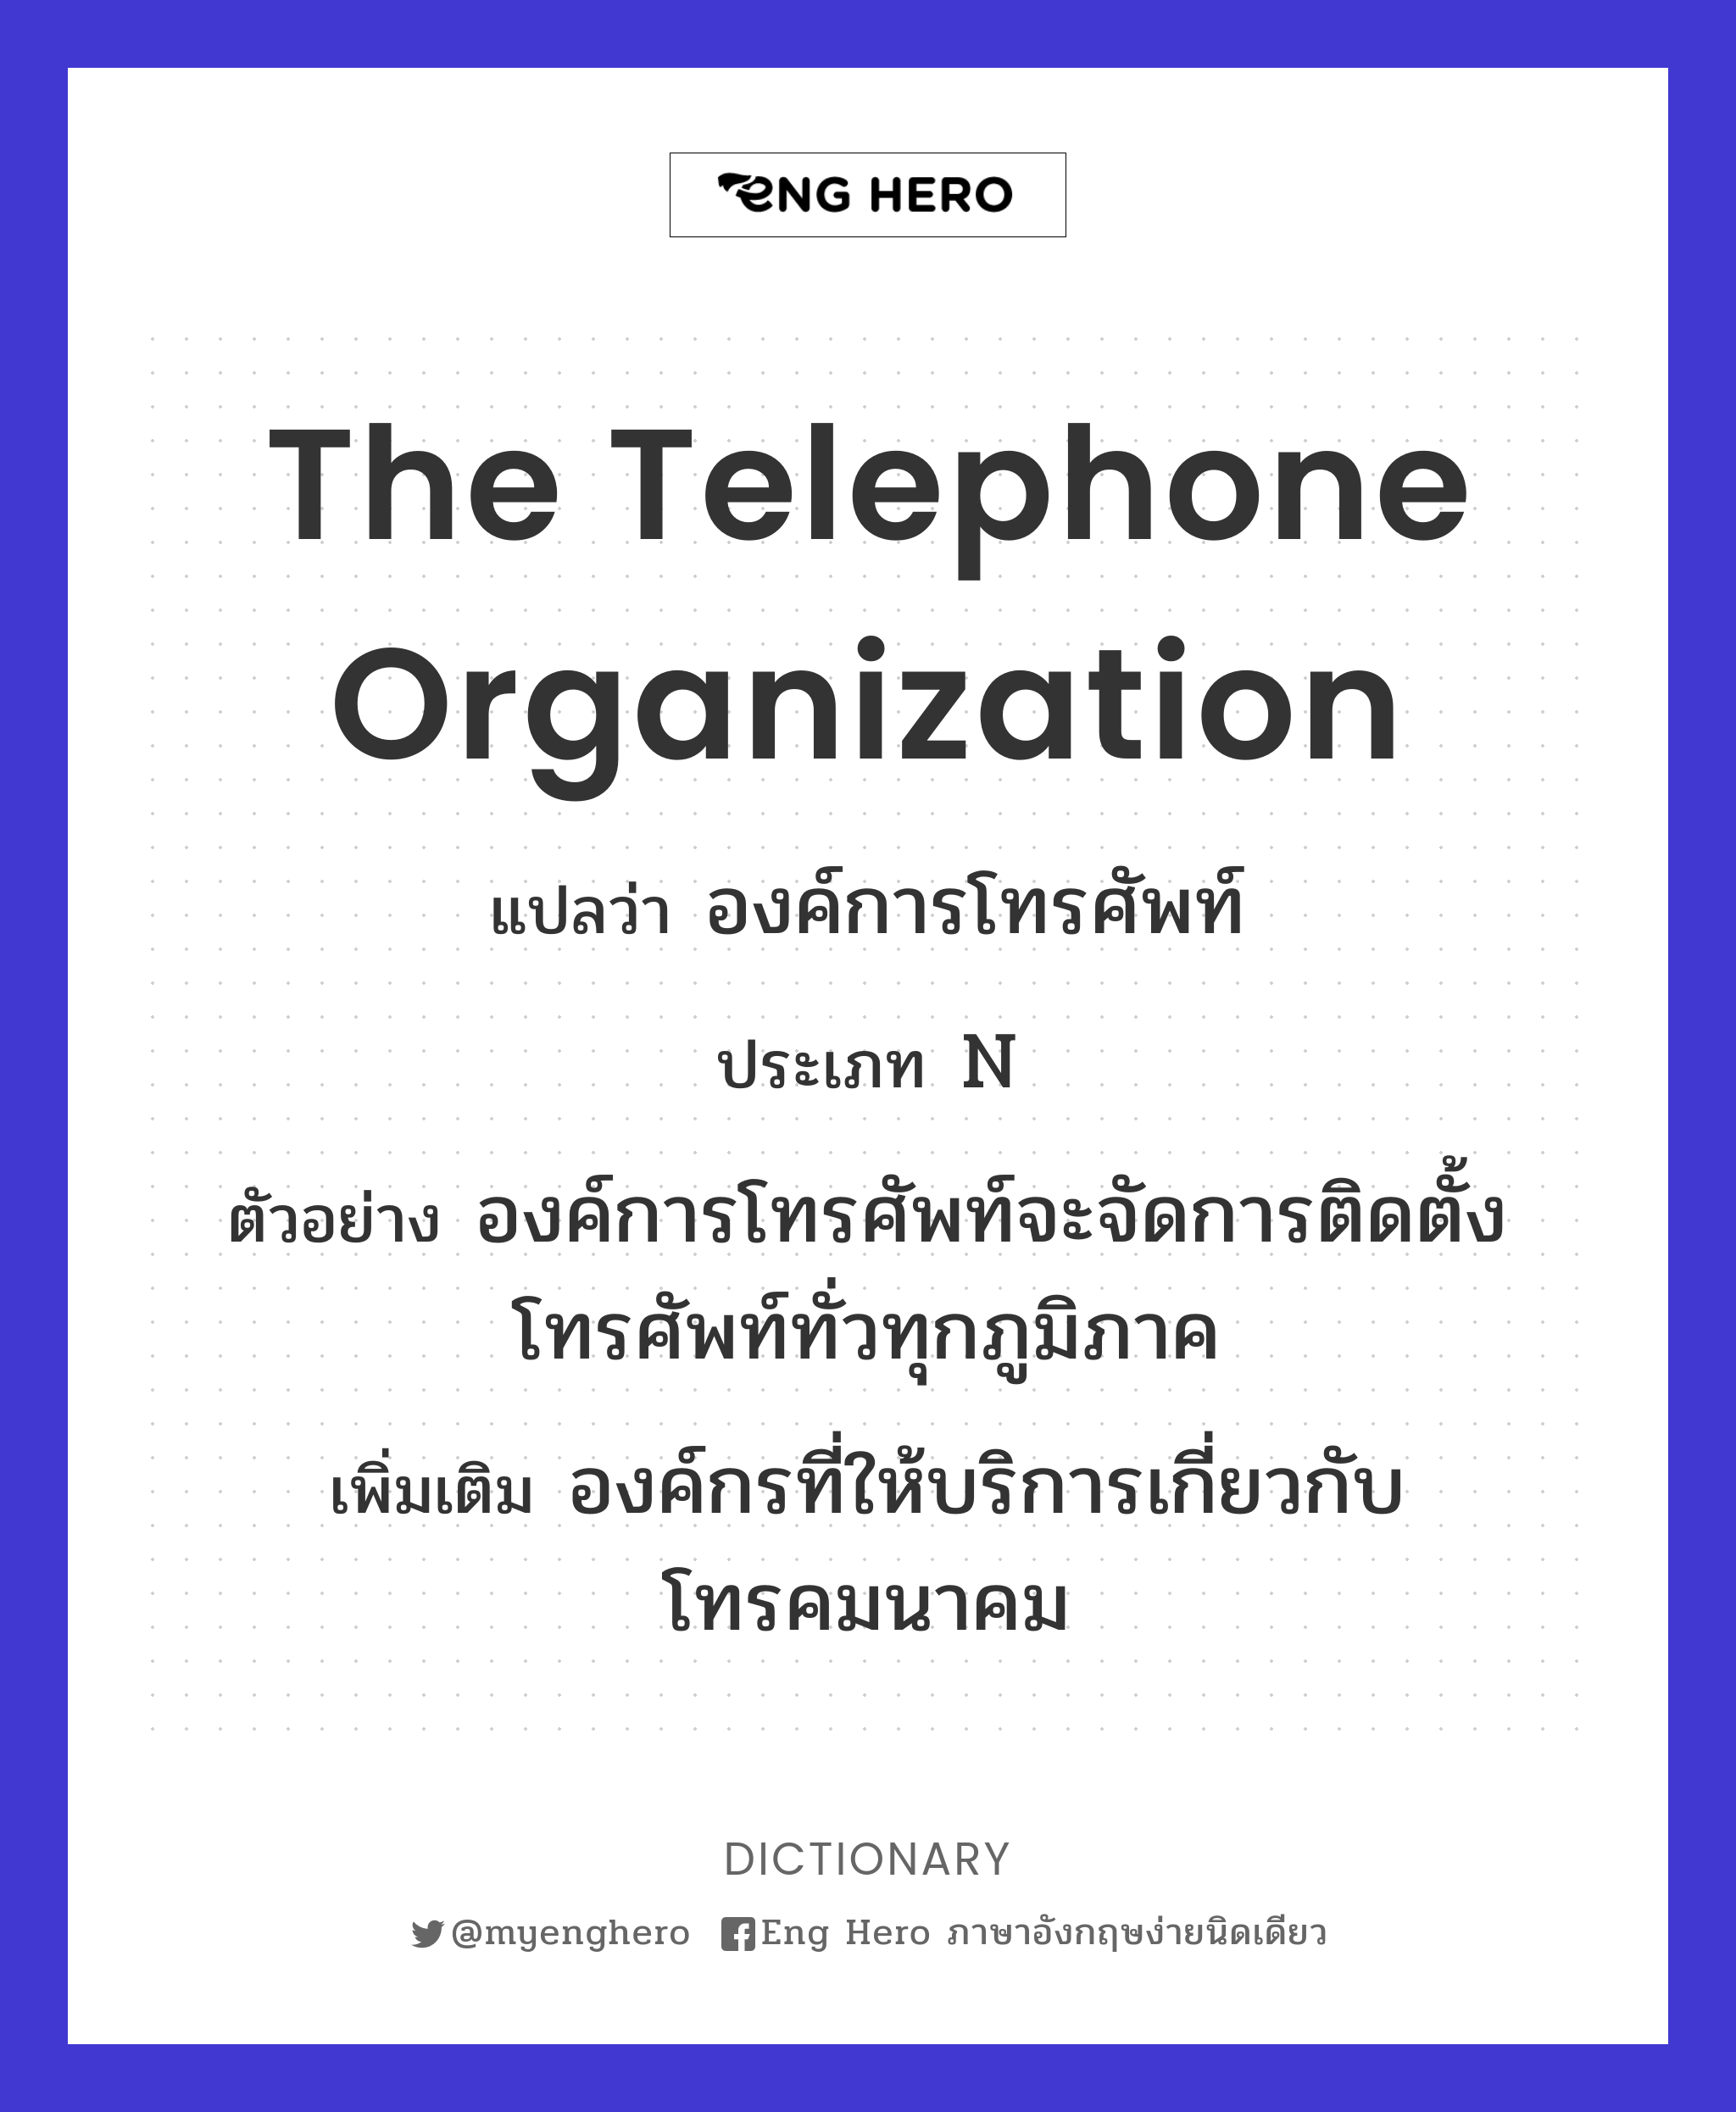 The Telephone Organization